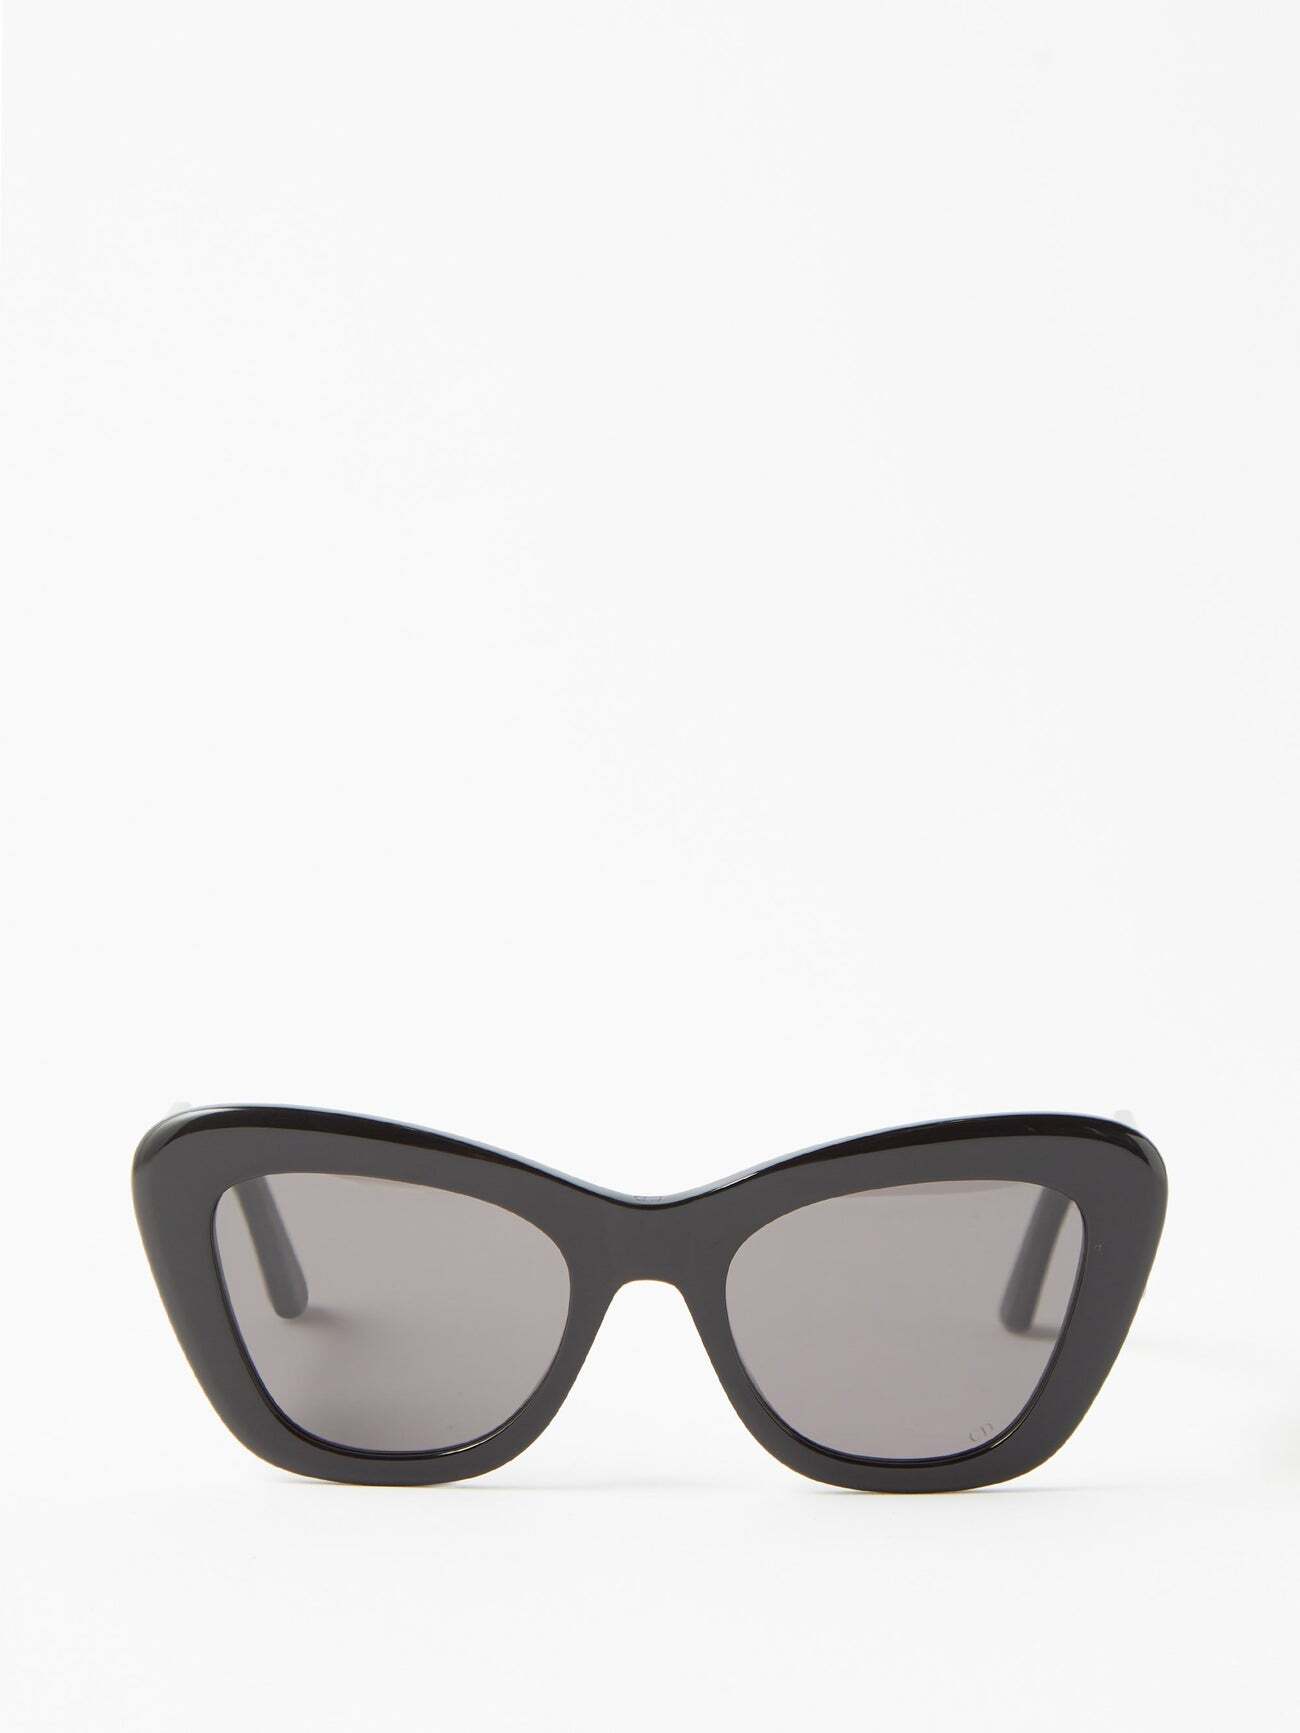 Dior - Diorbobby Cat-eye Acetate Sunglasses - Womens - Black